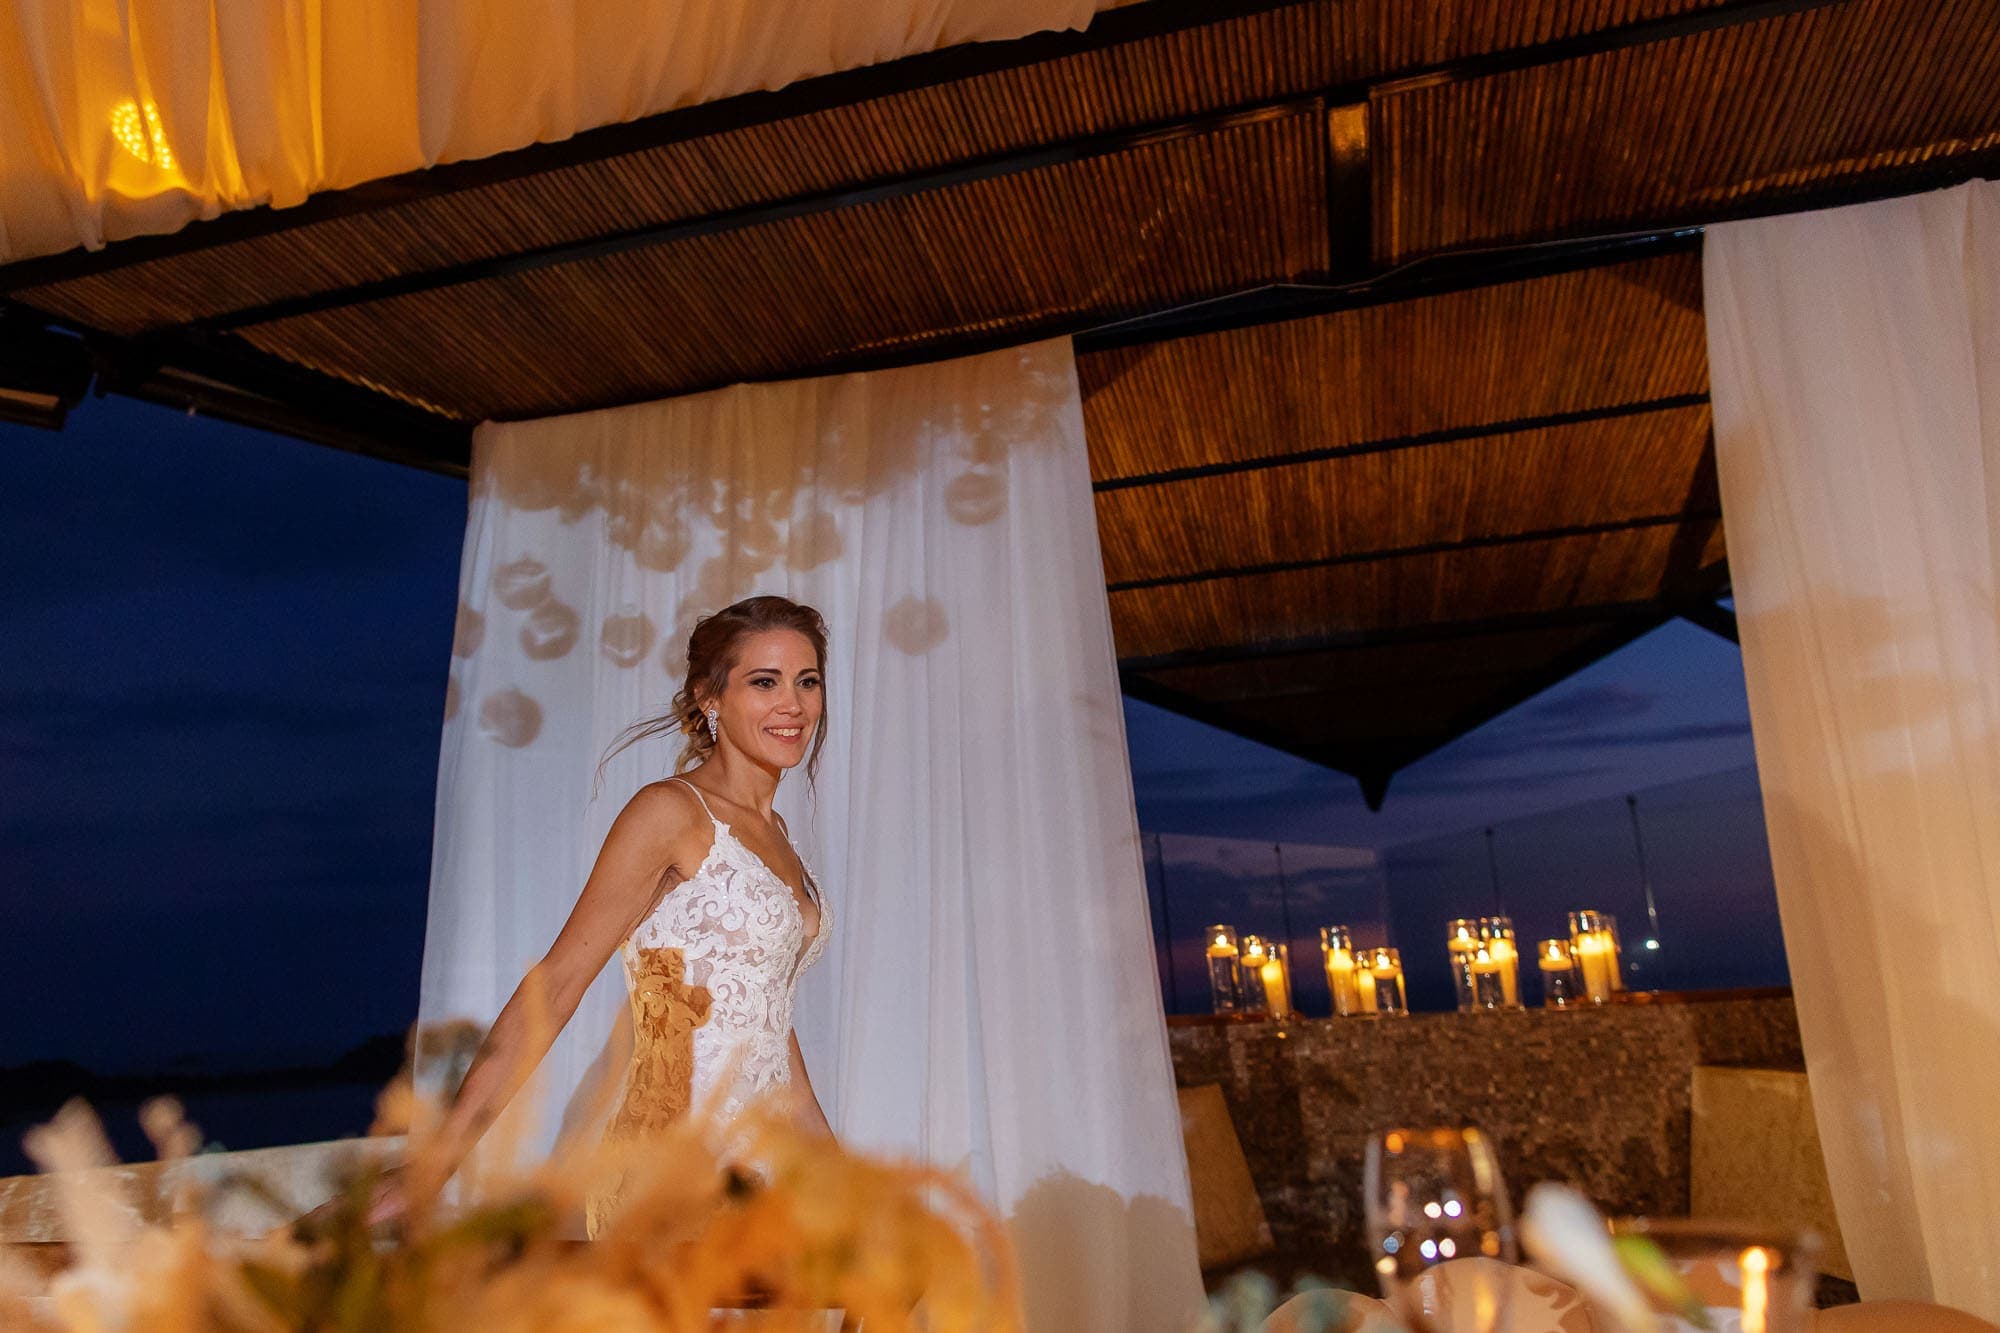 Bride at the reception in this luxury villa in costa rica